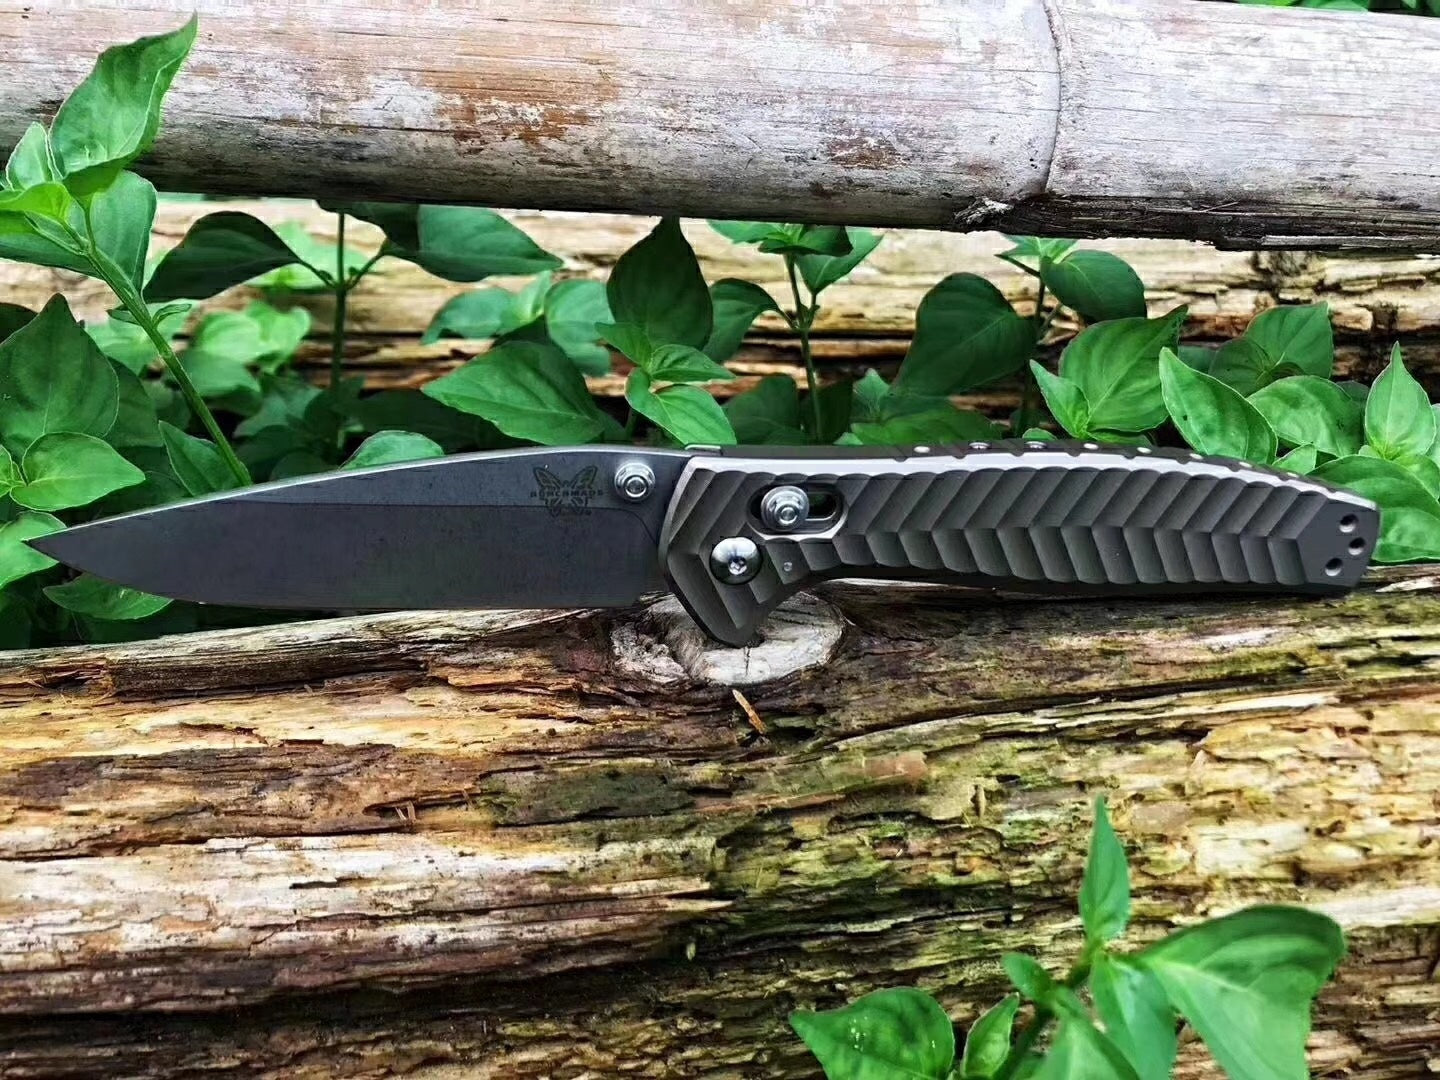 "Tactical Camping knife Benchmade 781 Anthem Folding Knife 3.5"" D2 Blade,Aluminum Handle Pocket Knife Survival Hunting Tools"